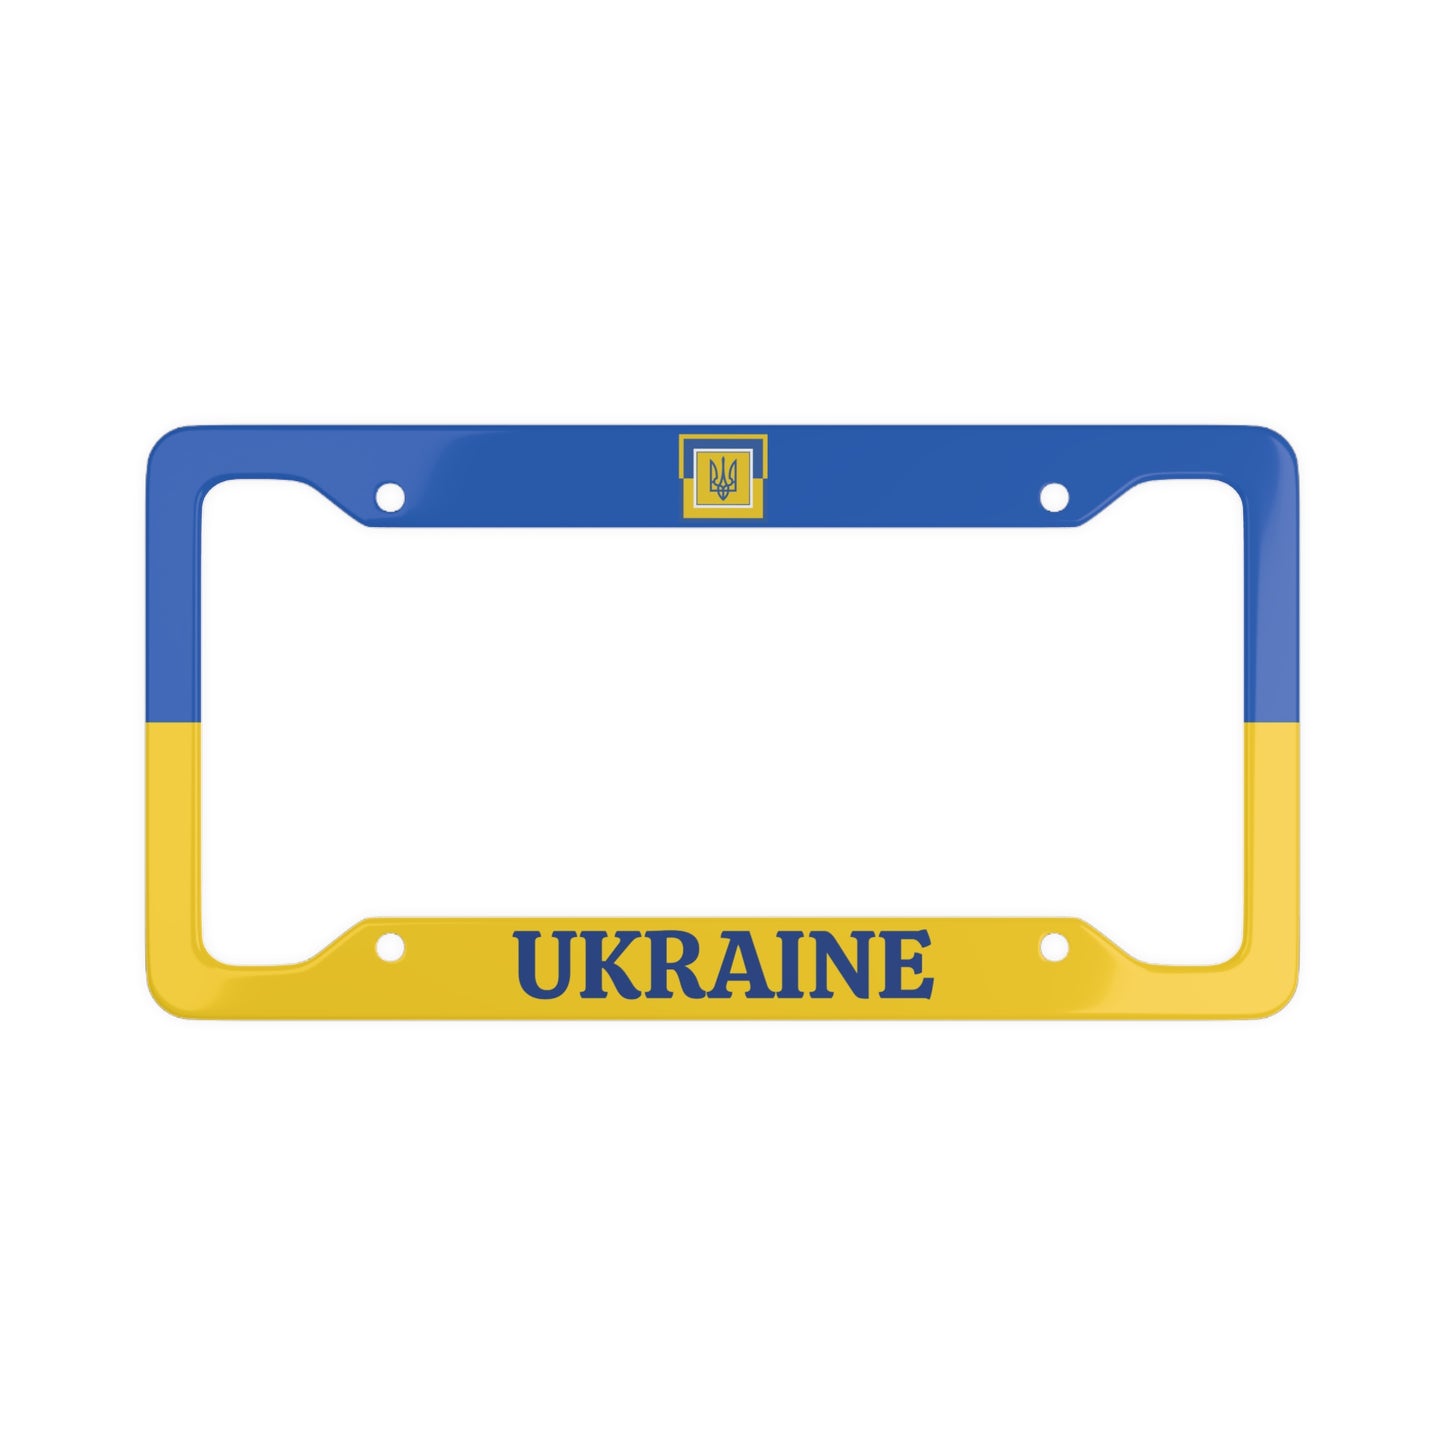 Ukraine Colorful License Plate Frame